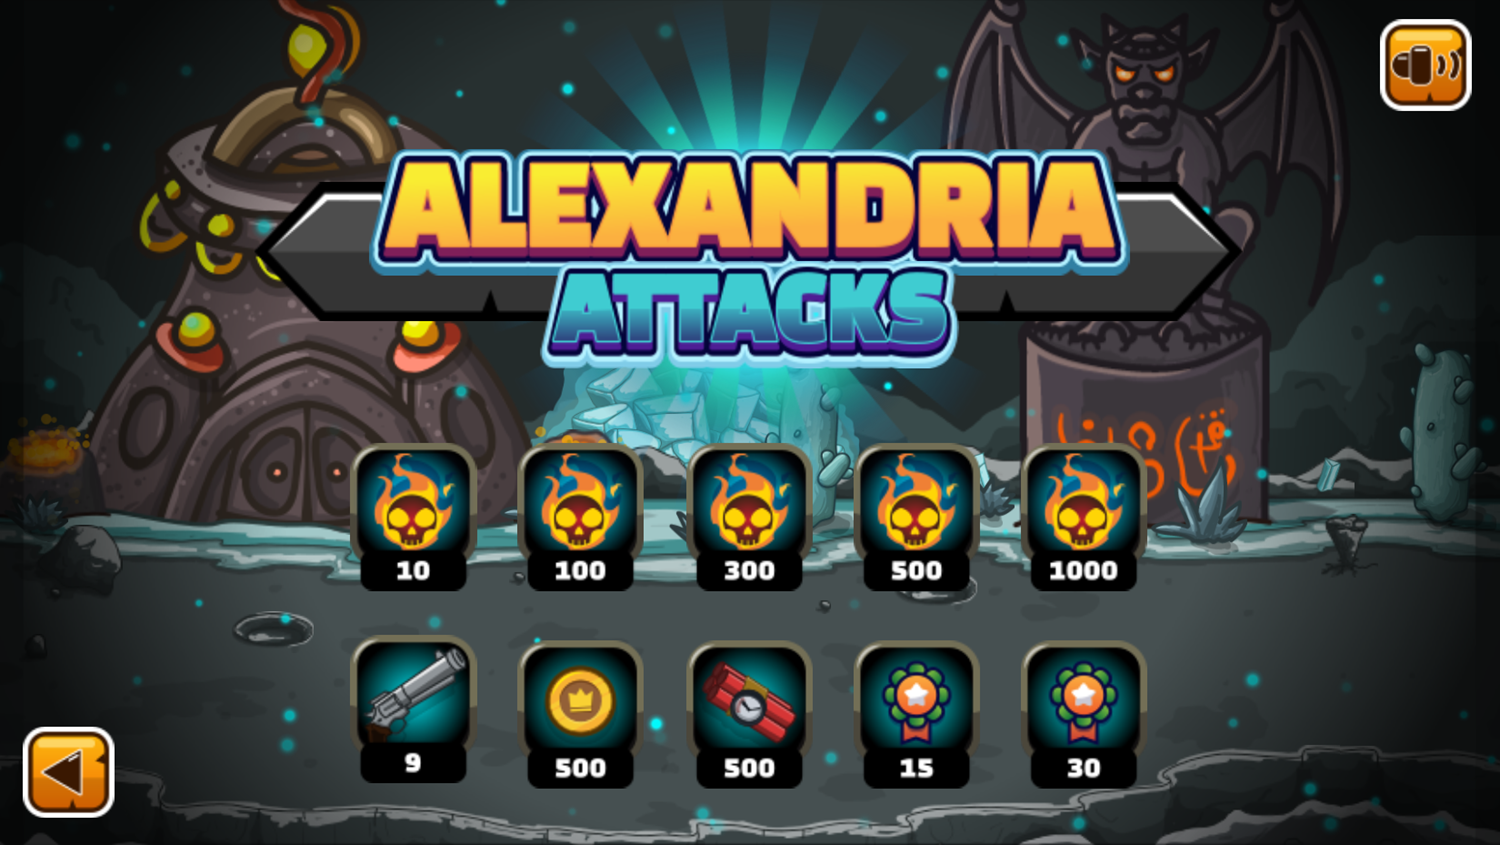 Alexandria Attacks Game Achievements Screen Screenshot.